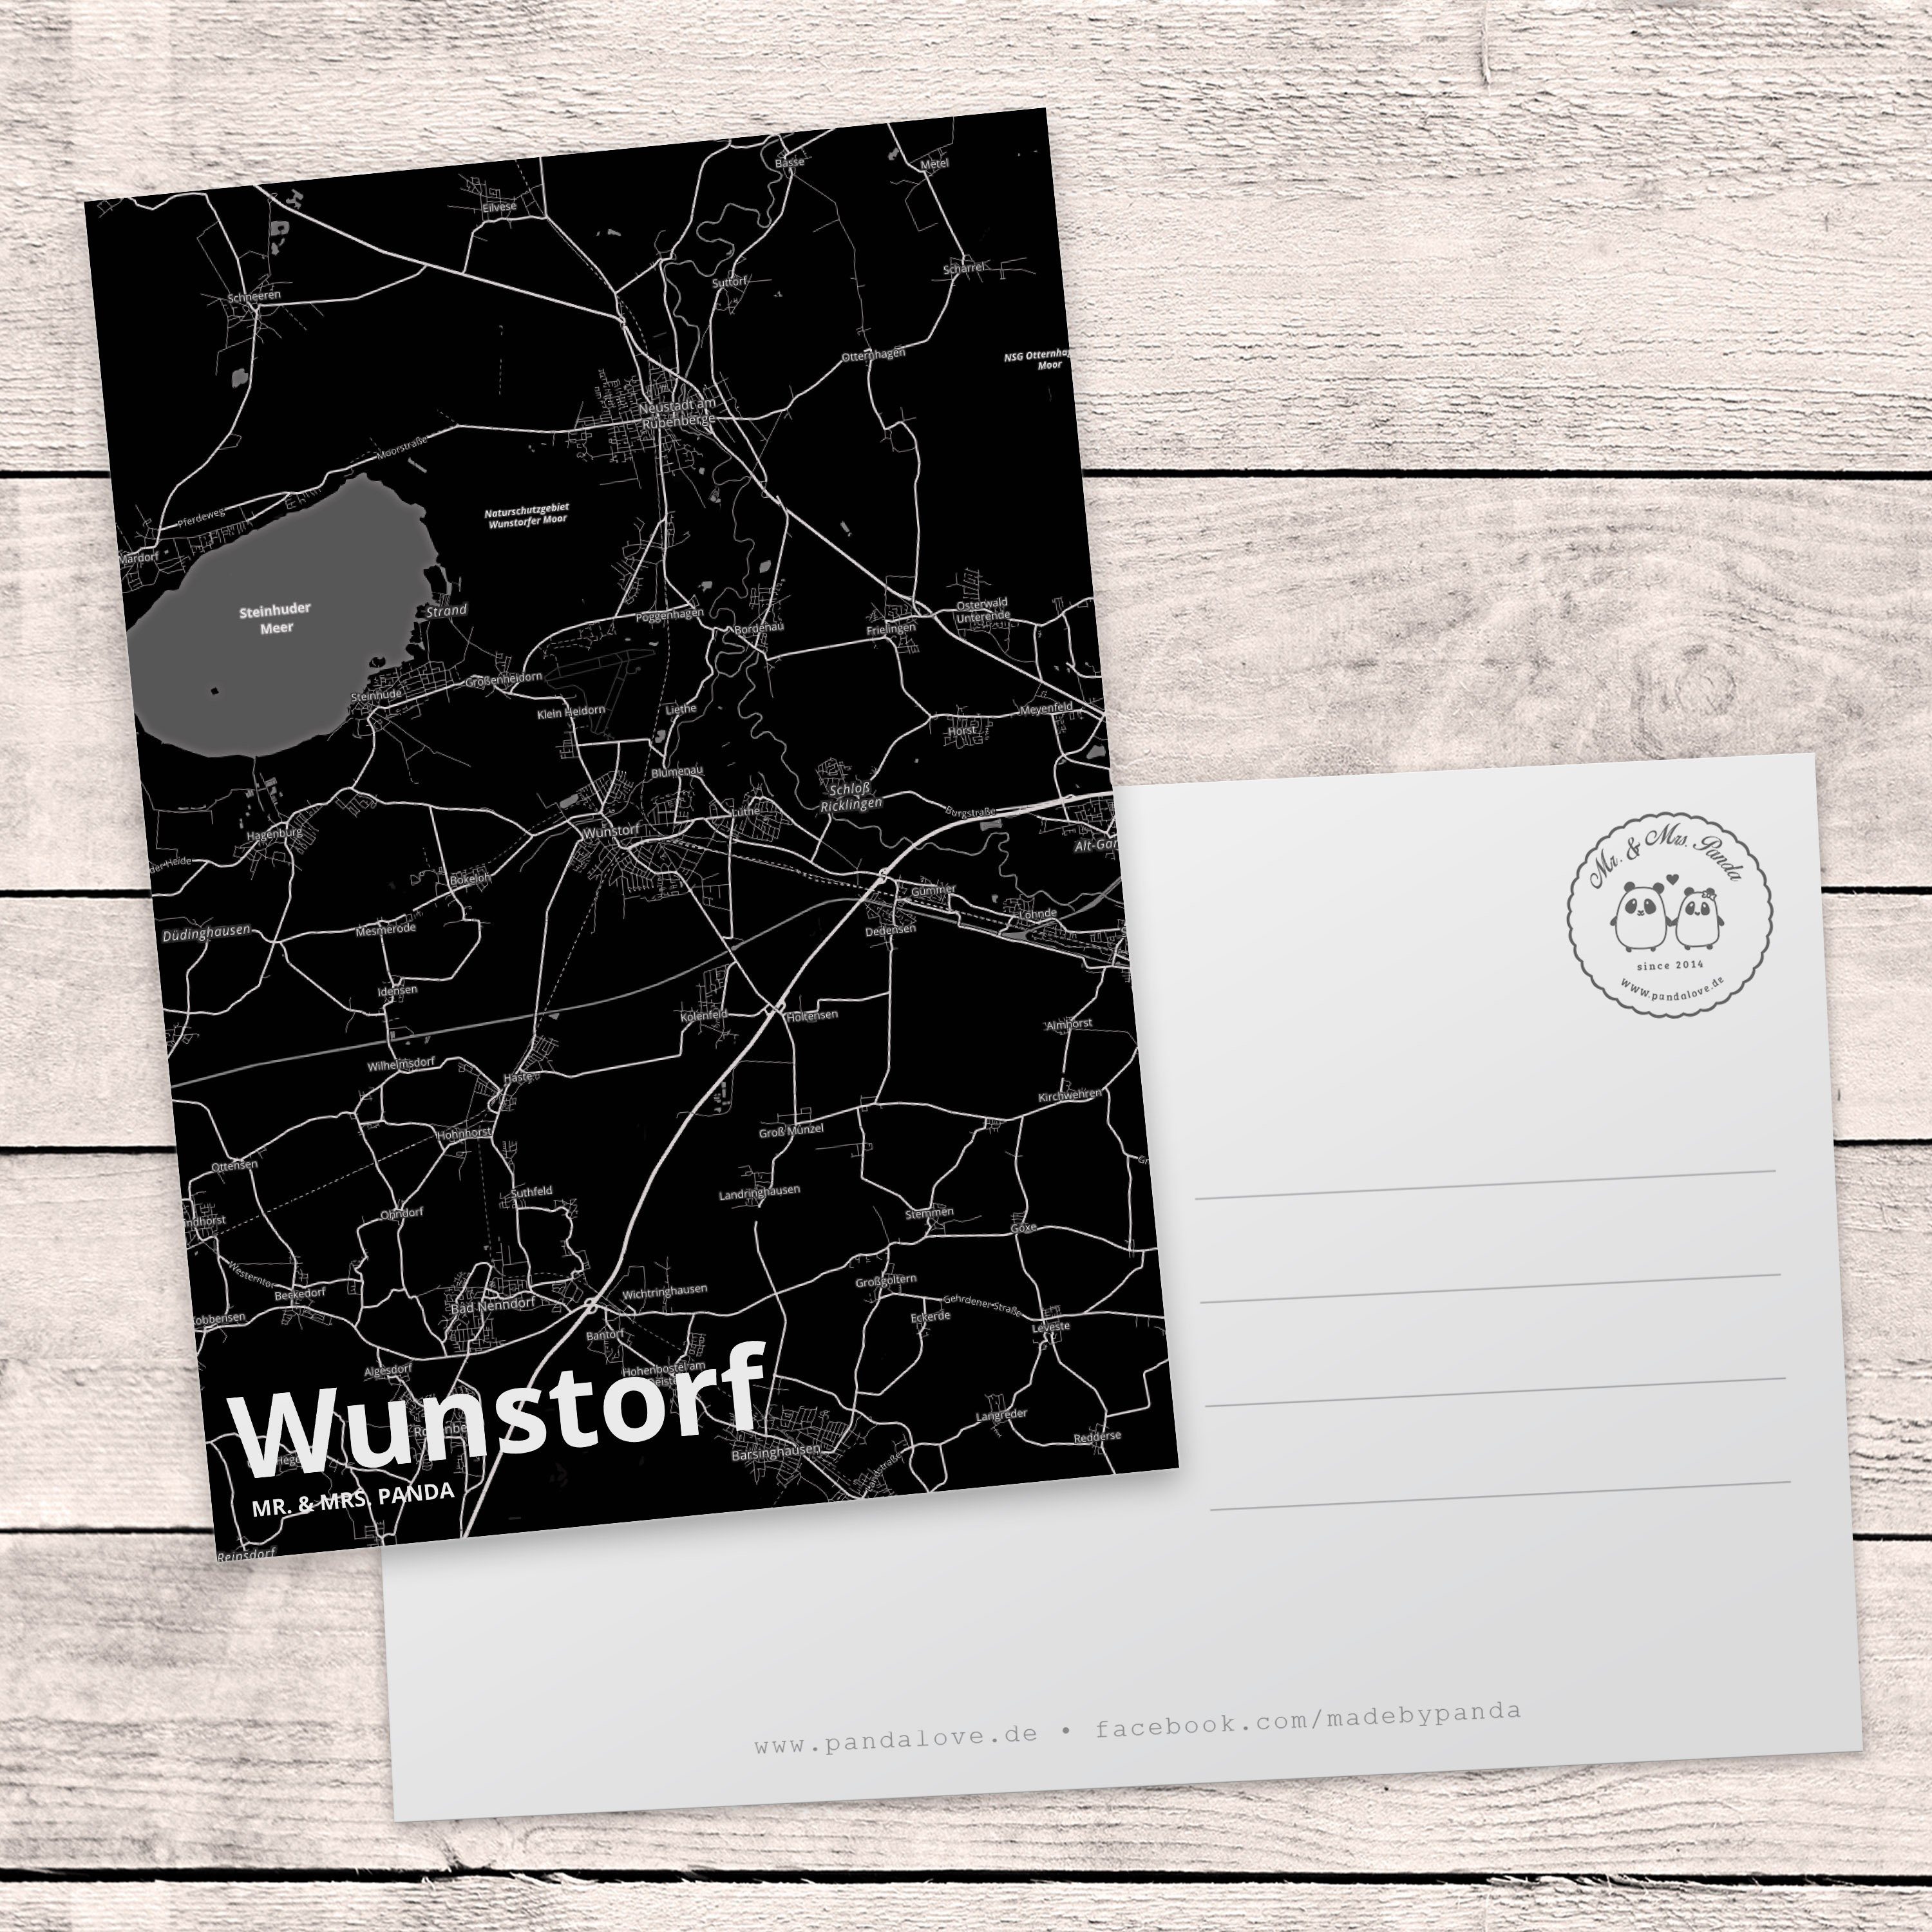 Mr. & Mrs. Panda Postkarte Wunstorf Geschenk, Grußkarte, Karte, Städte, Stadt Karte - Landk Dorf